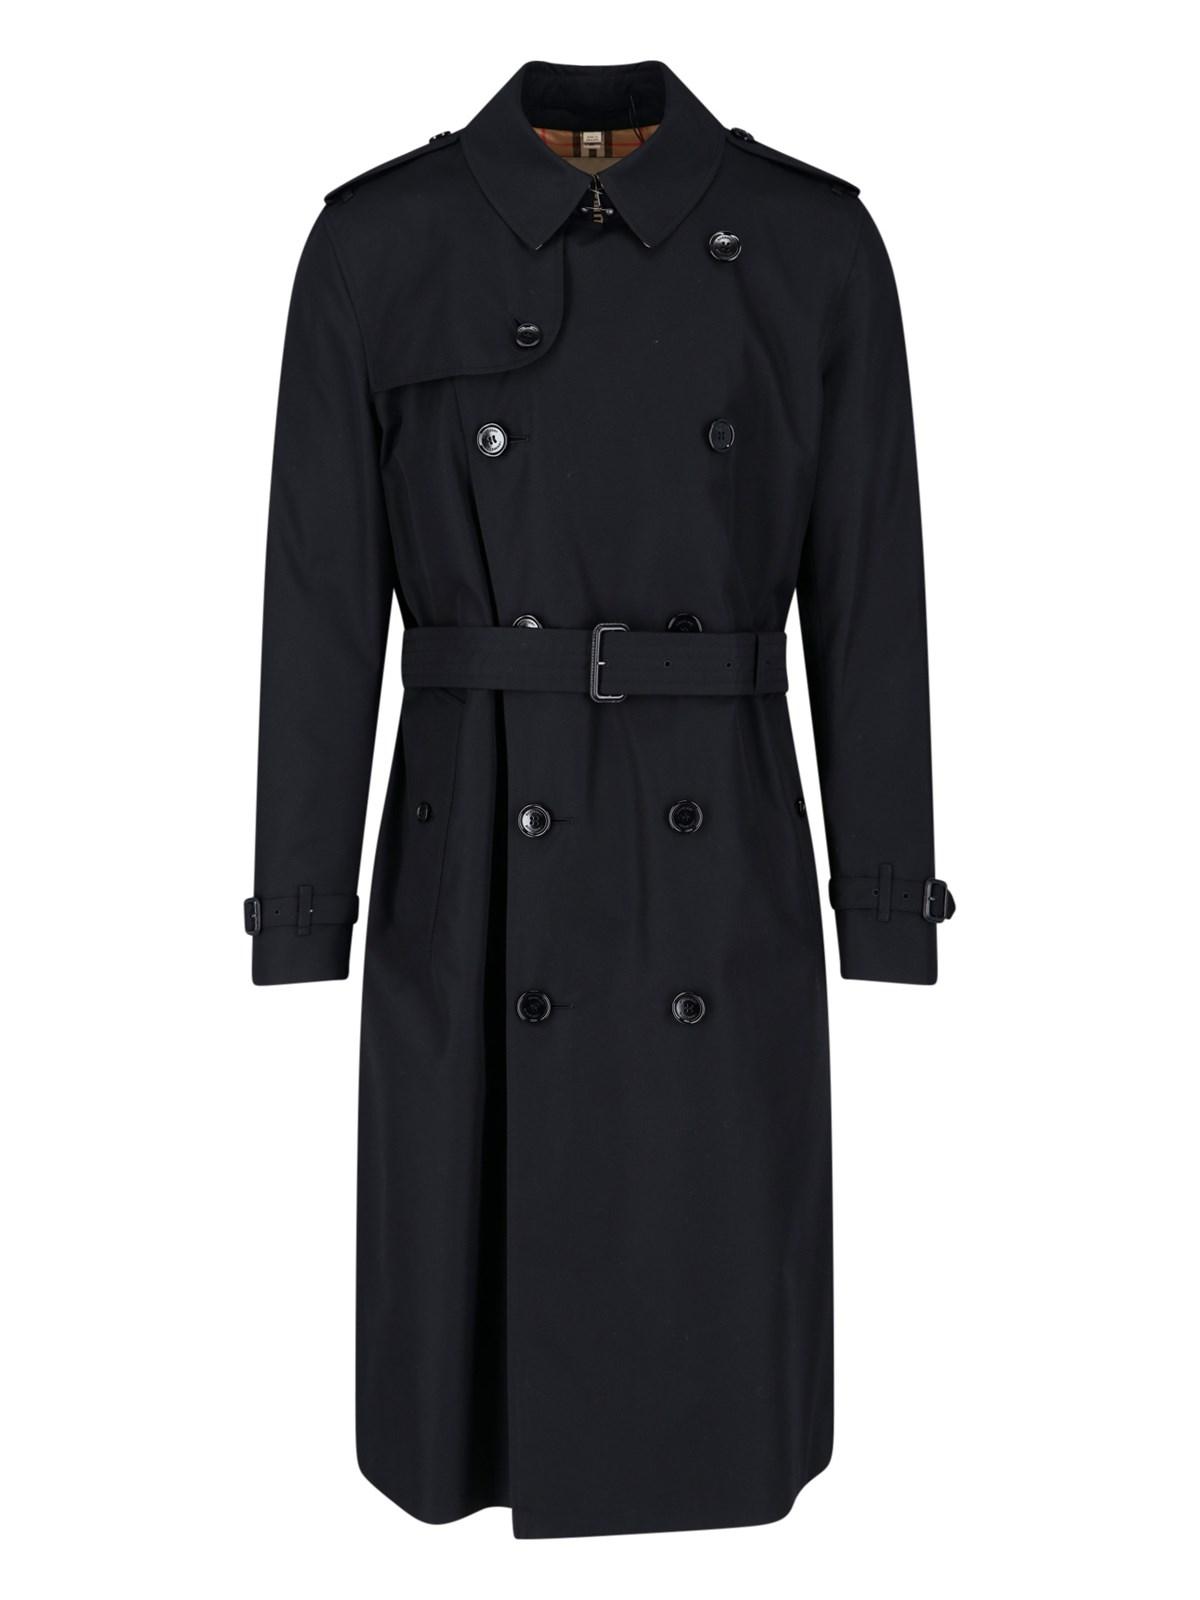 Burberry 'heritage The Kensington' Trench Coat in Black for Men | Lyst